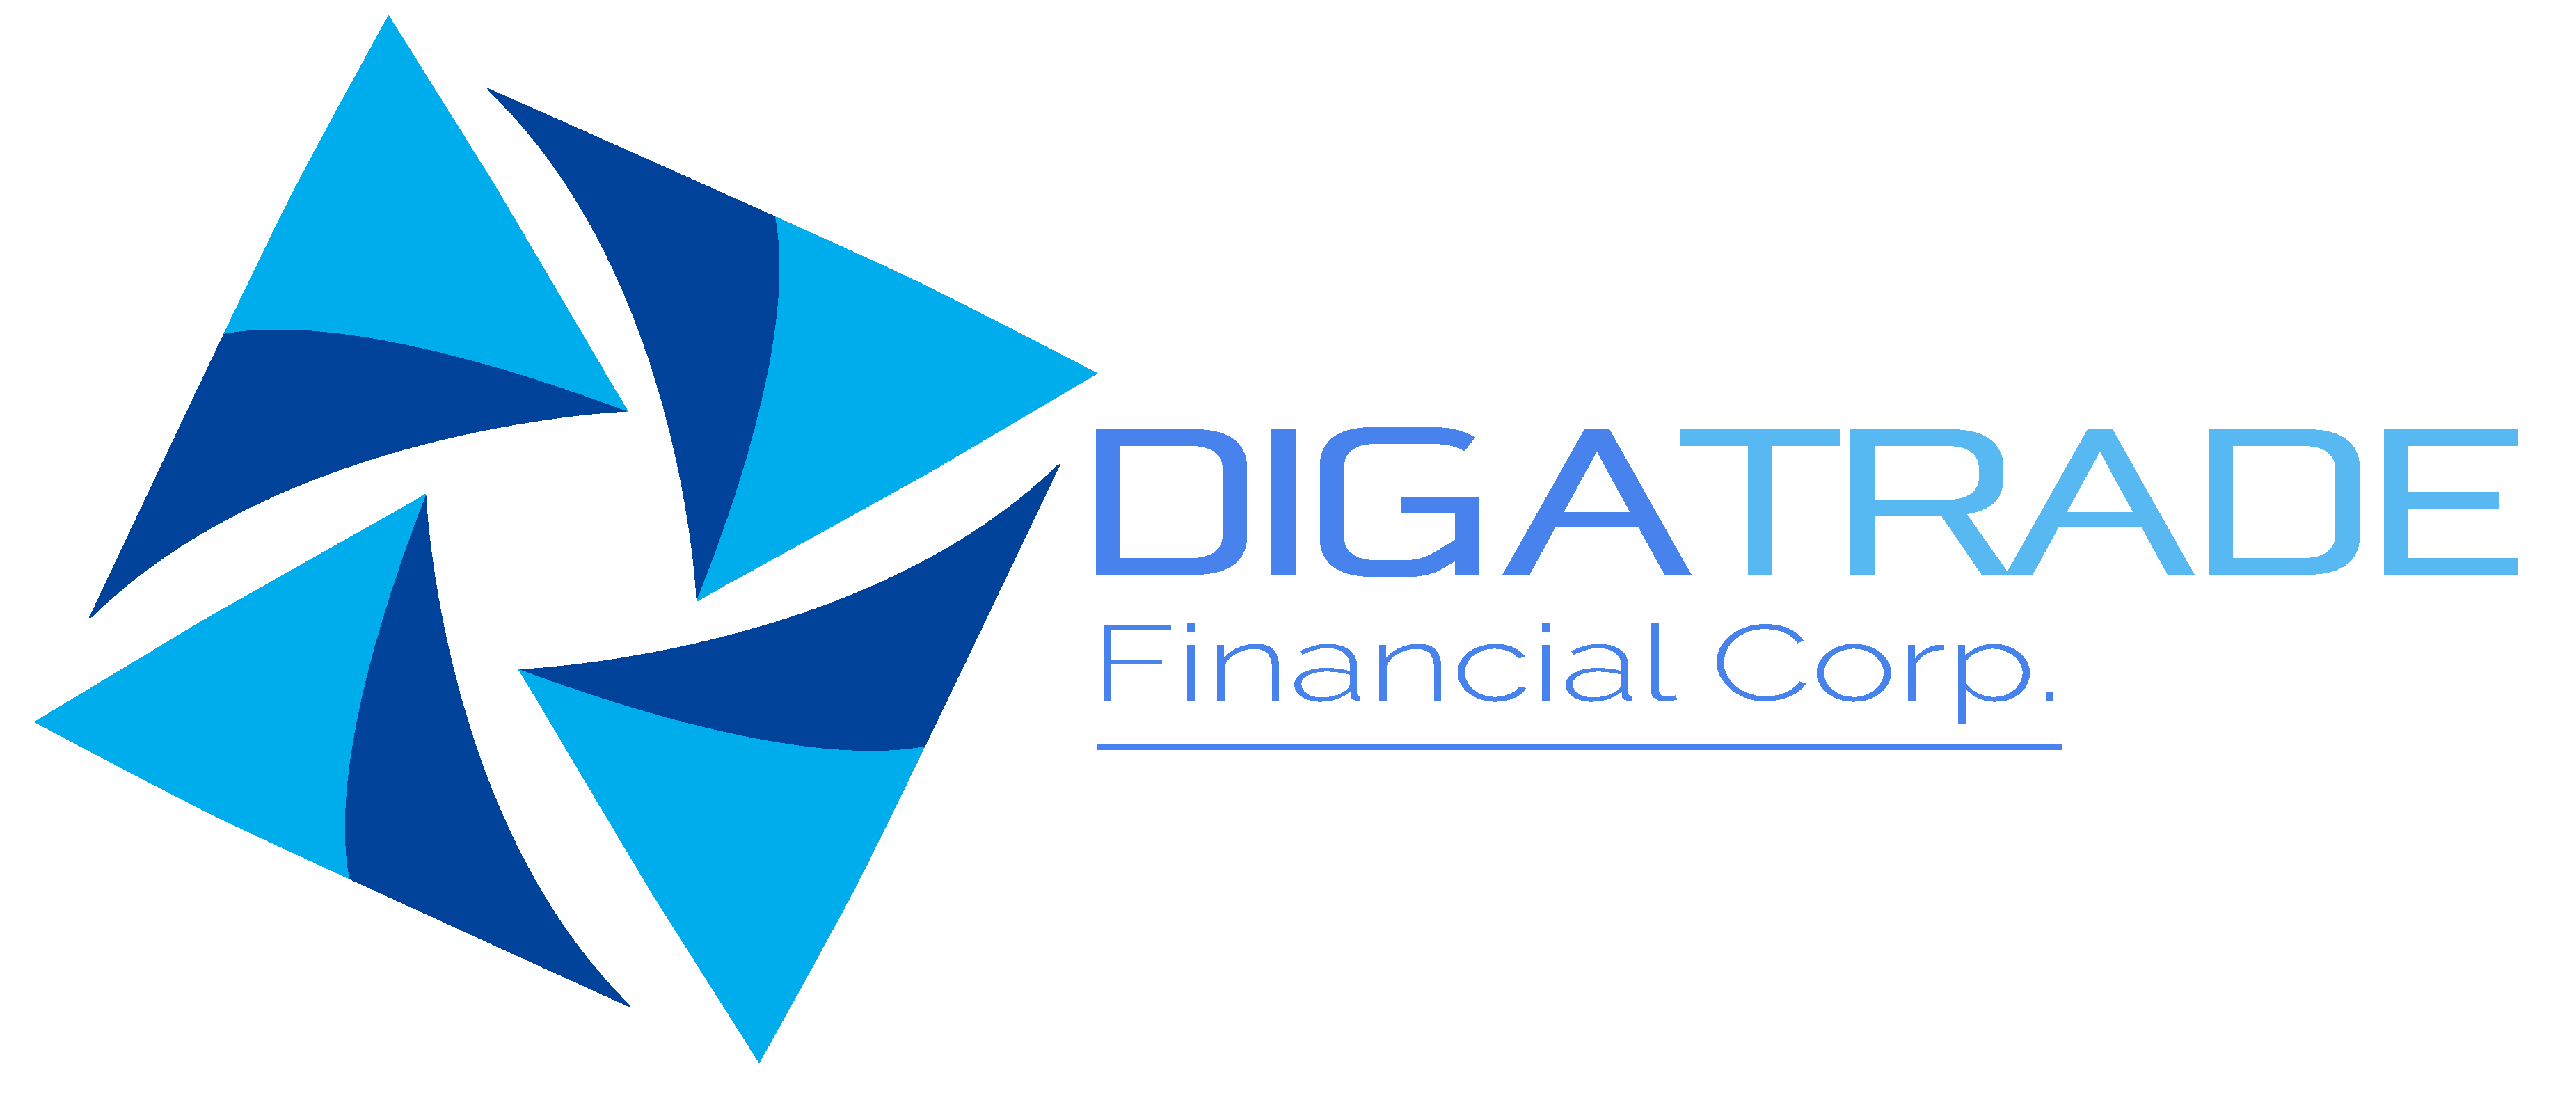 Digatrade Financial Corp